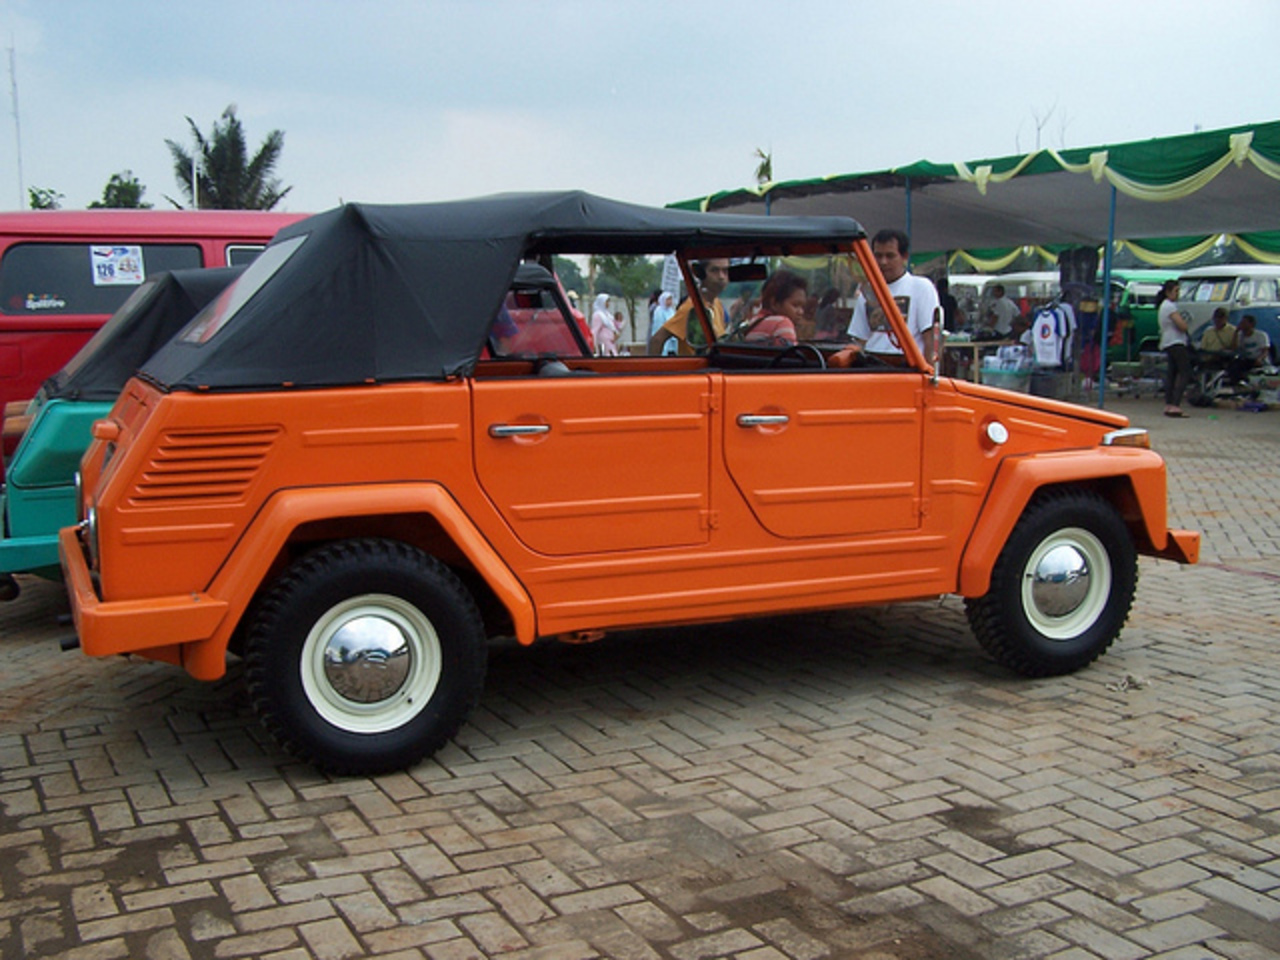 Volkswagen type 181 | Flickr - Photo Sharing!